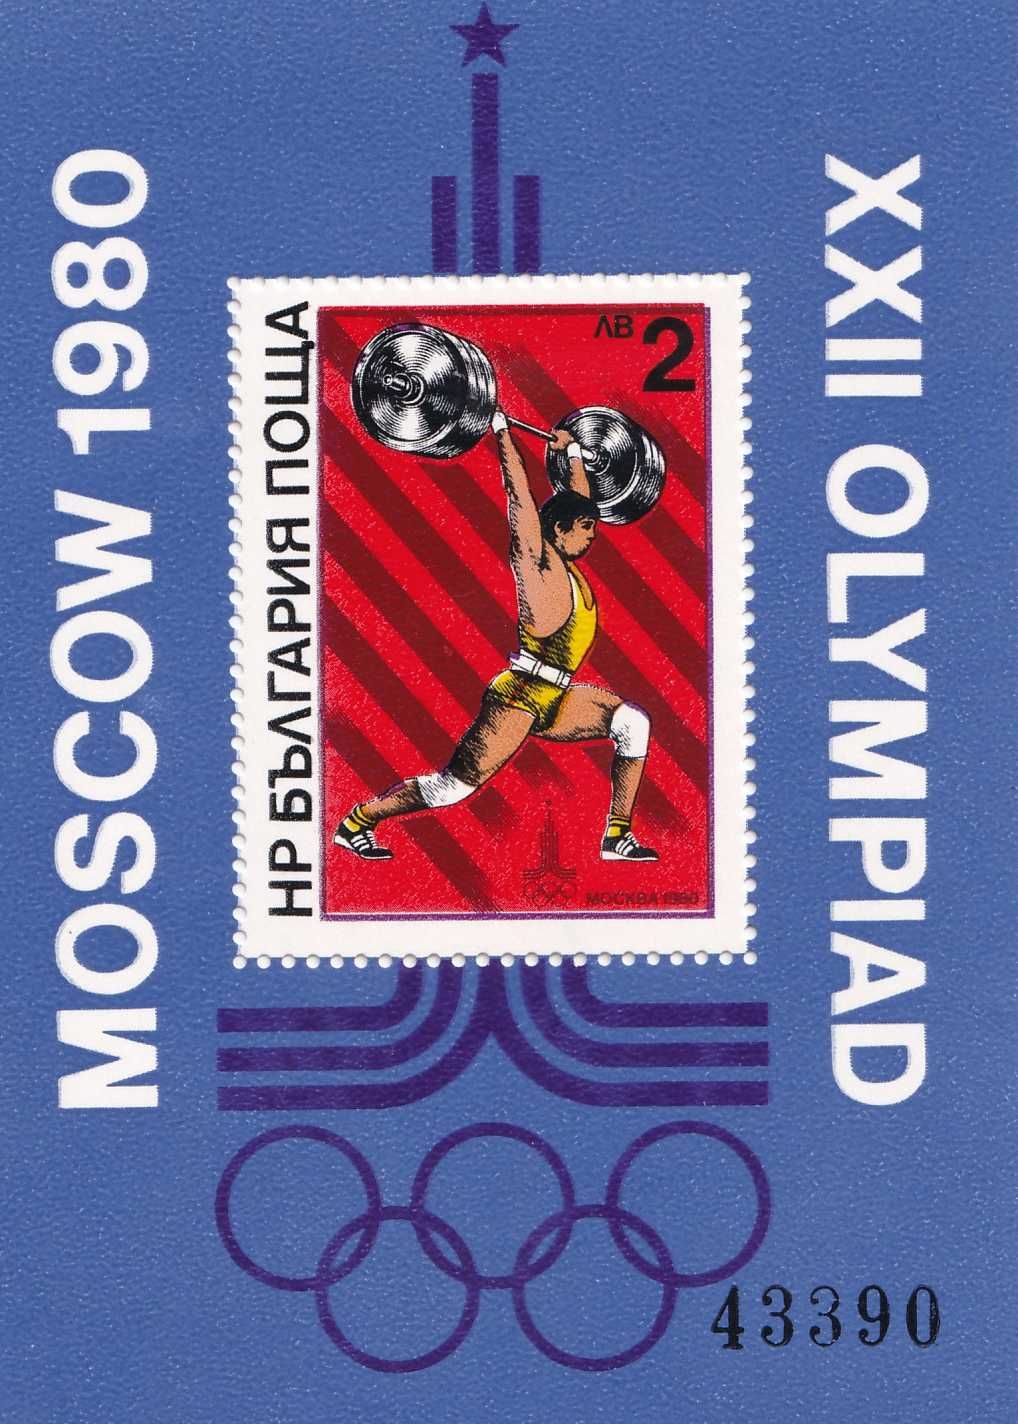 Bułgaria 1980 cena 3,90 zł kat.8€ - sport, IO Moskwa